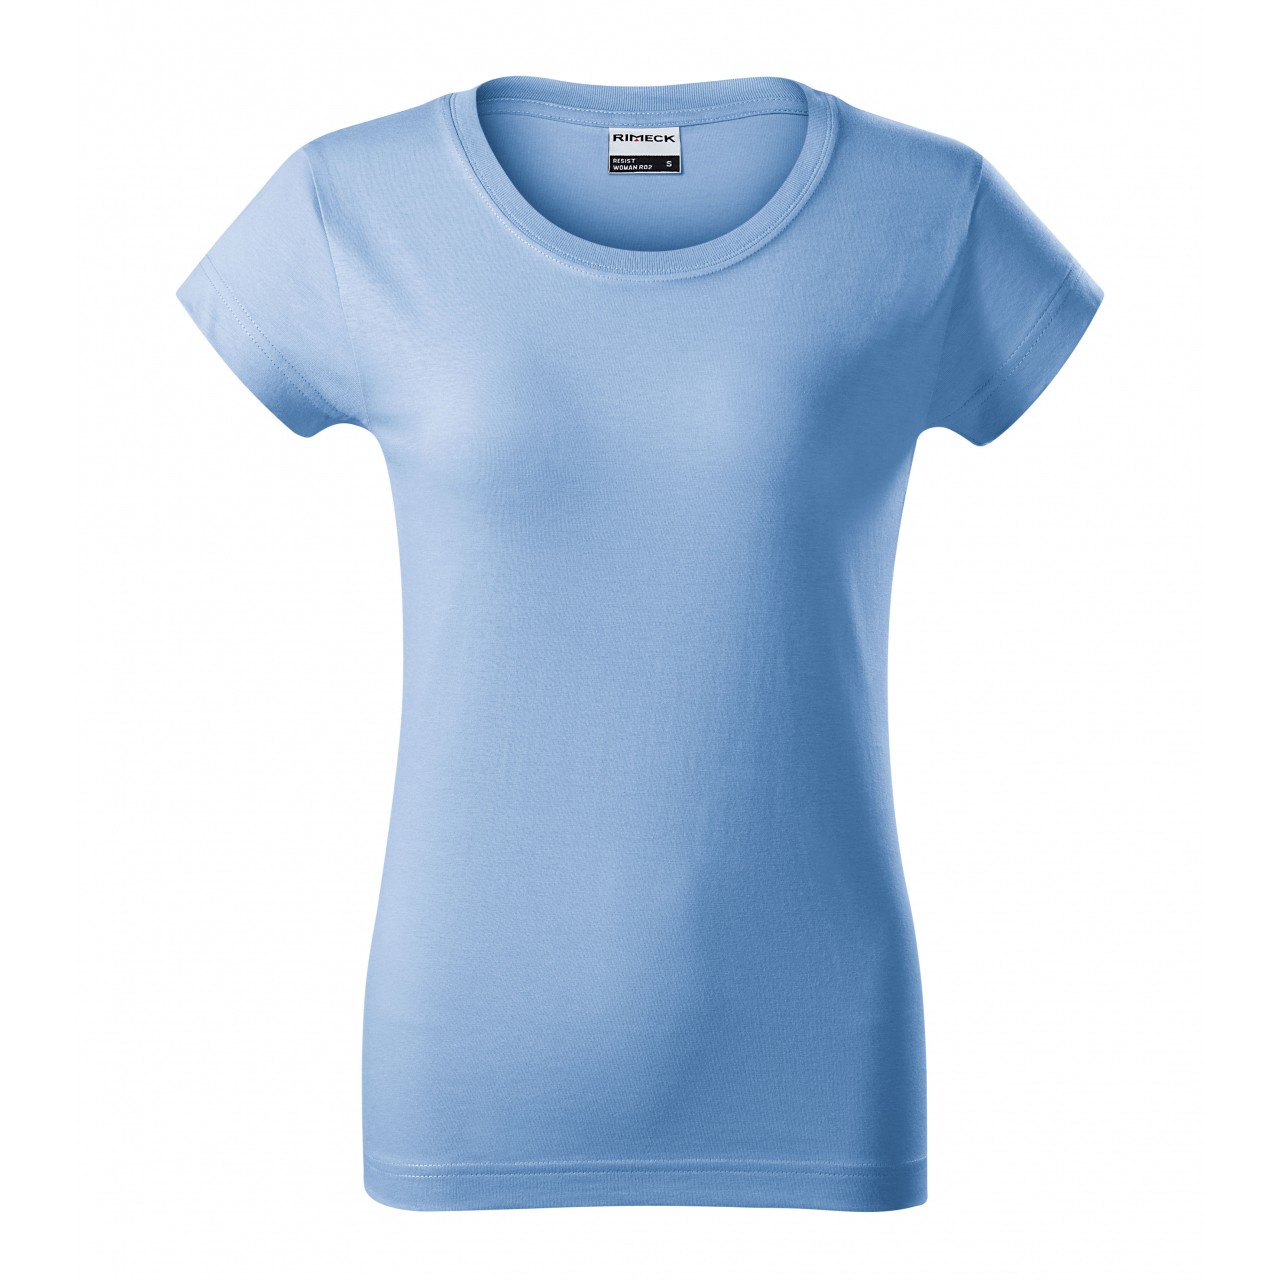 Tričko dámské Rimeck Resist - světle modré, XL